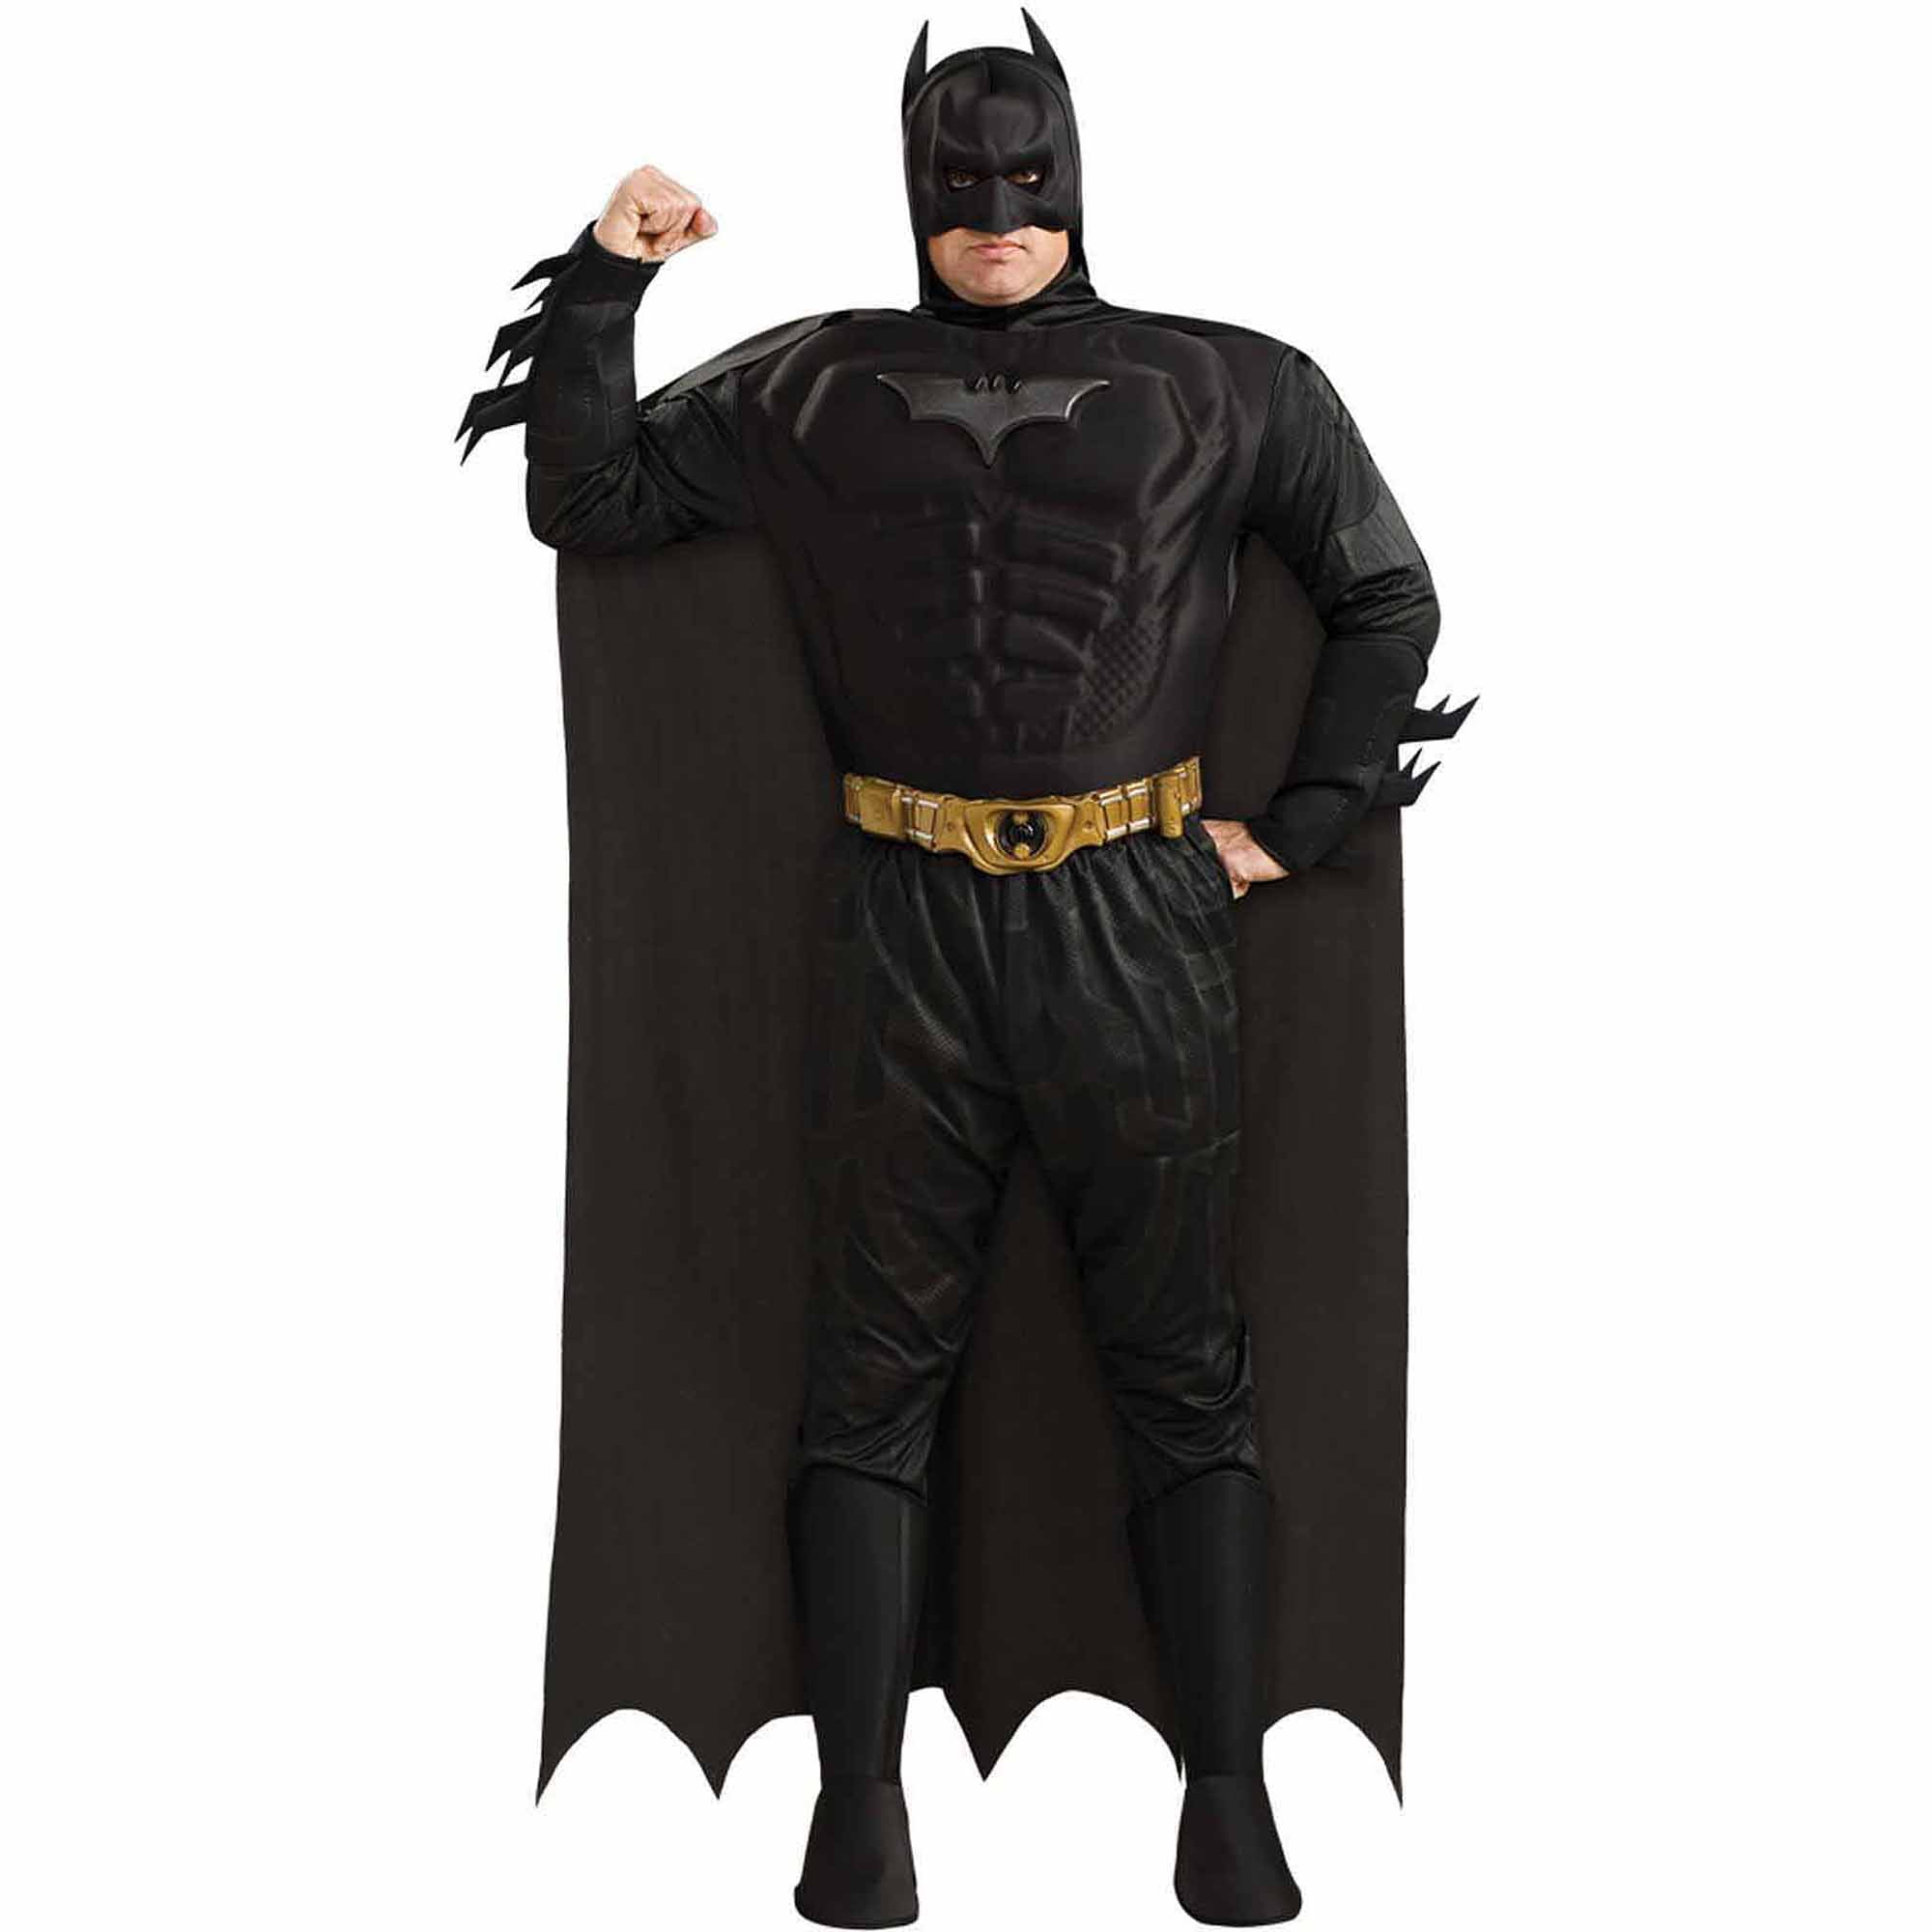 Adult The Joker Classic Fancy Dress Costume Batman Dark Knight Rises Outfit New 